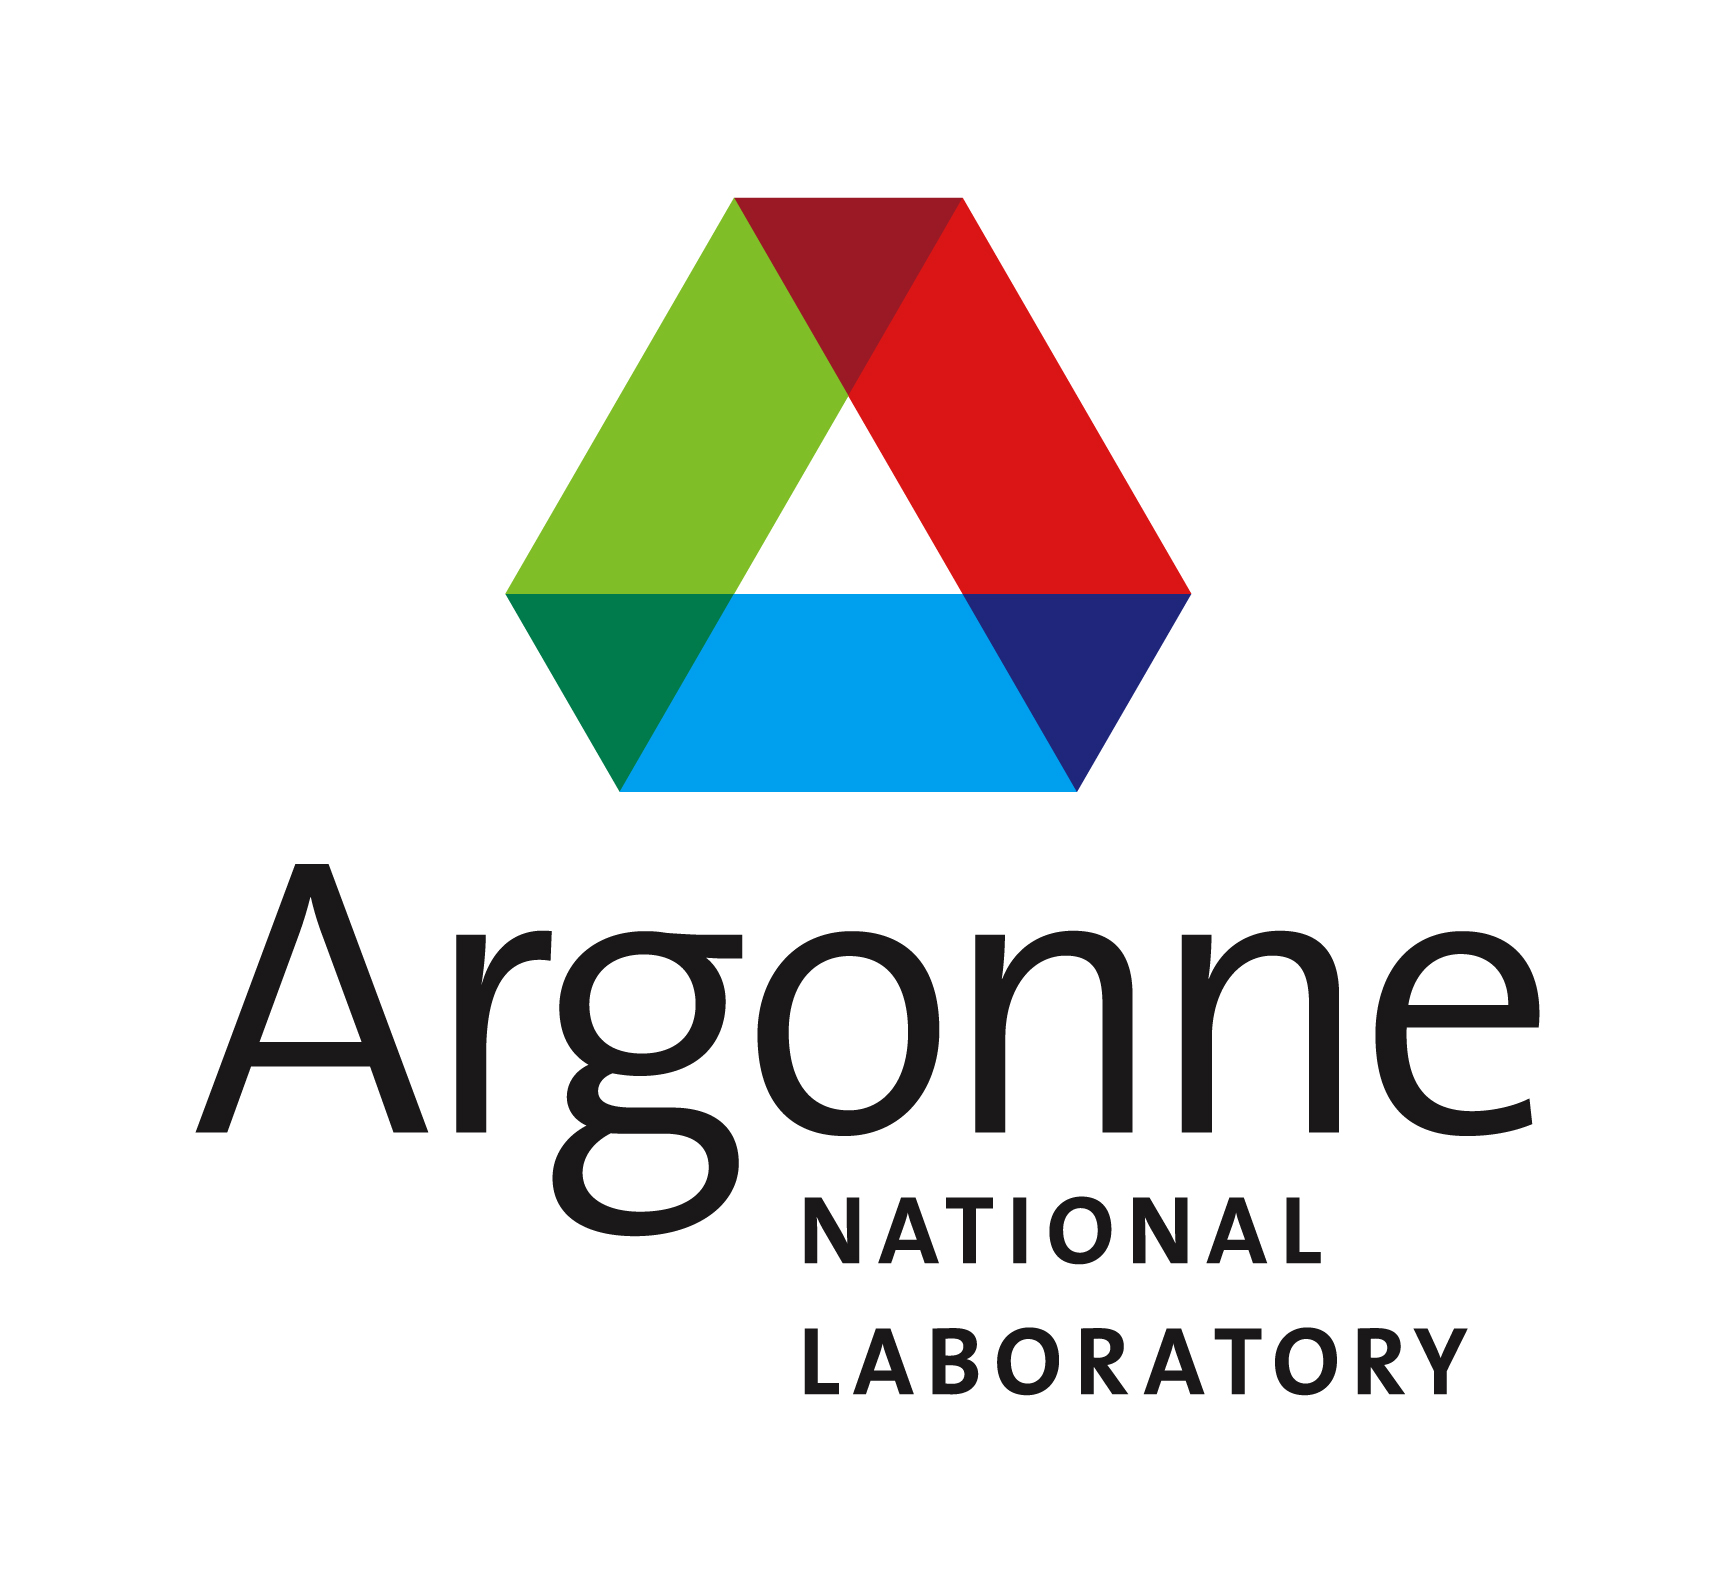 http://www.net4info.de/photos/cpg/albums/userpics/10002/Argonne_National_Laboratory_.jpg